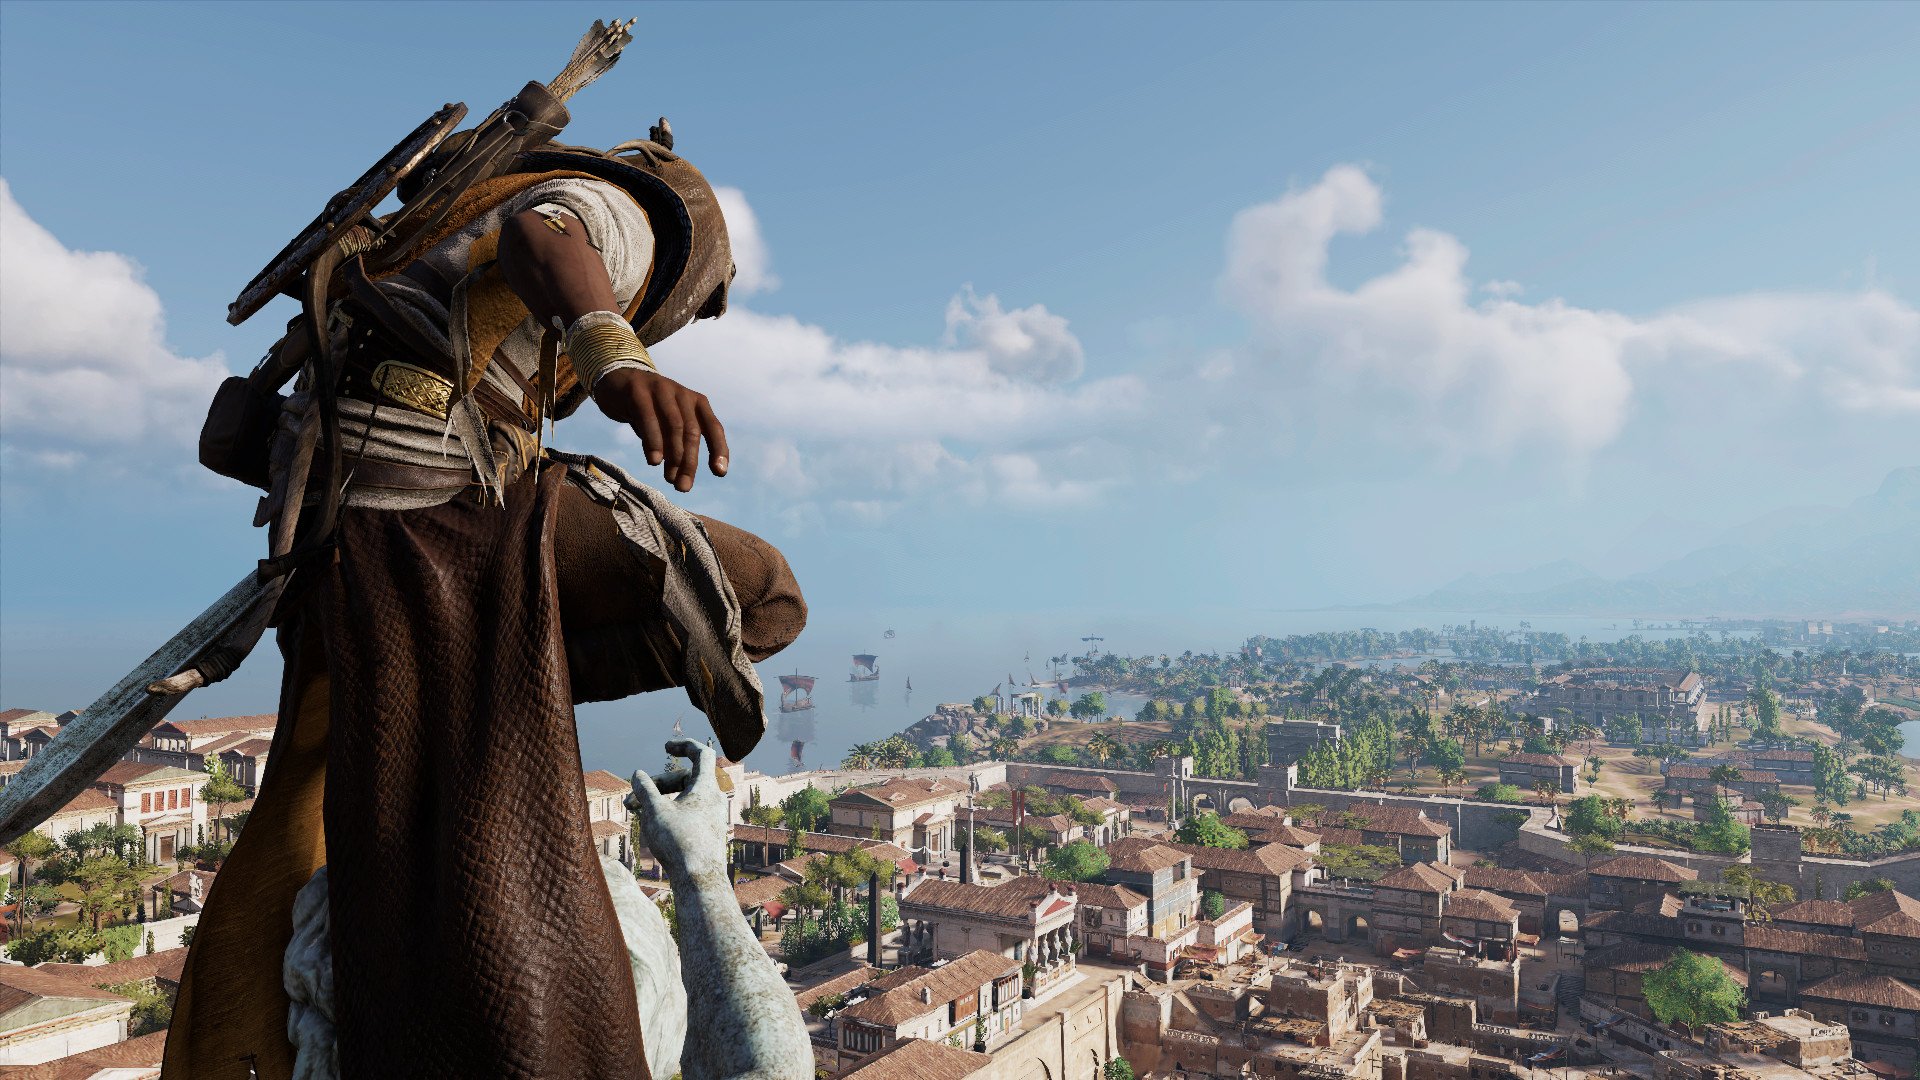 Assassin&#39;s Creed Origins